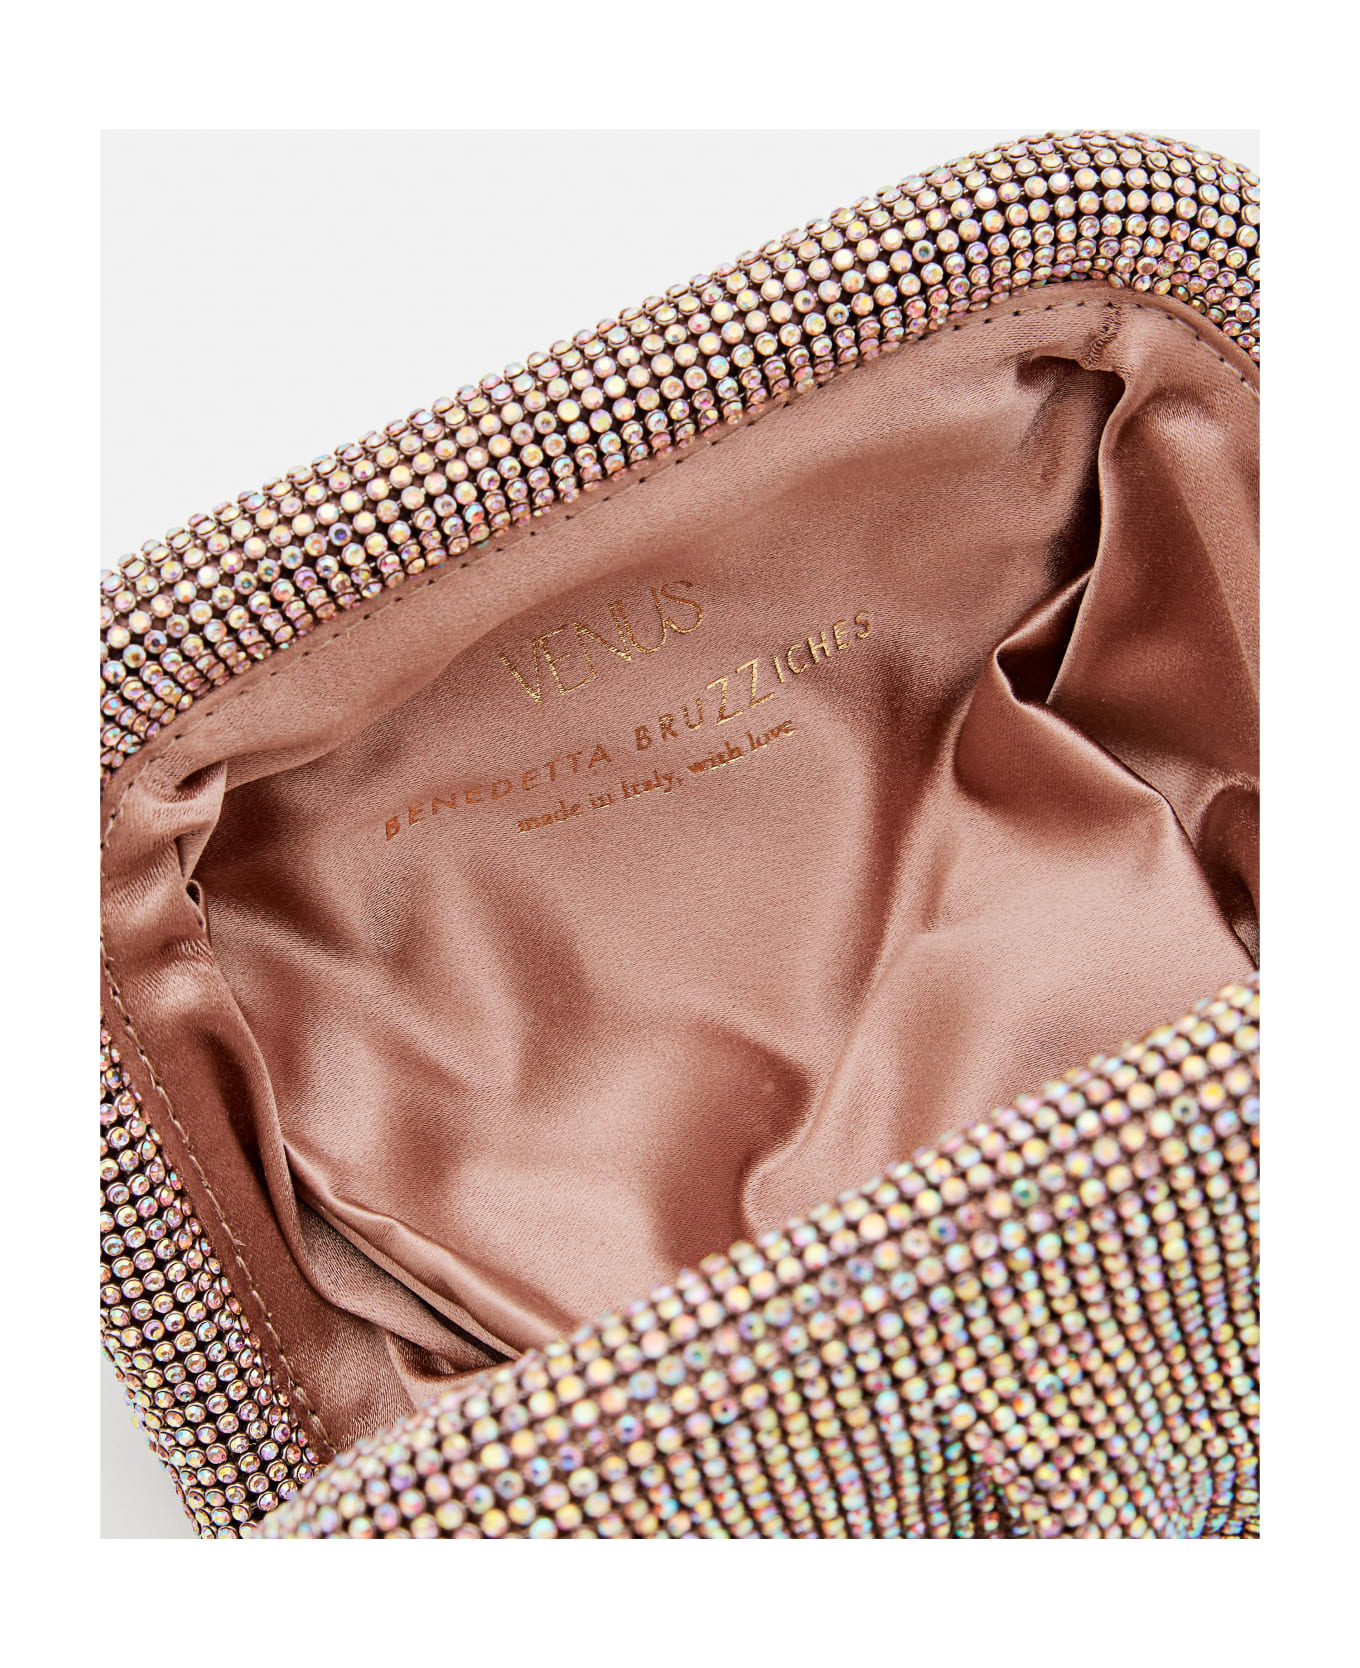 Benedetta Bruzziches Small Venus Handbag - Pink クラッチバッグ